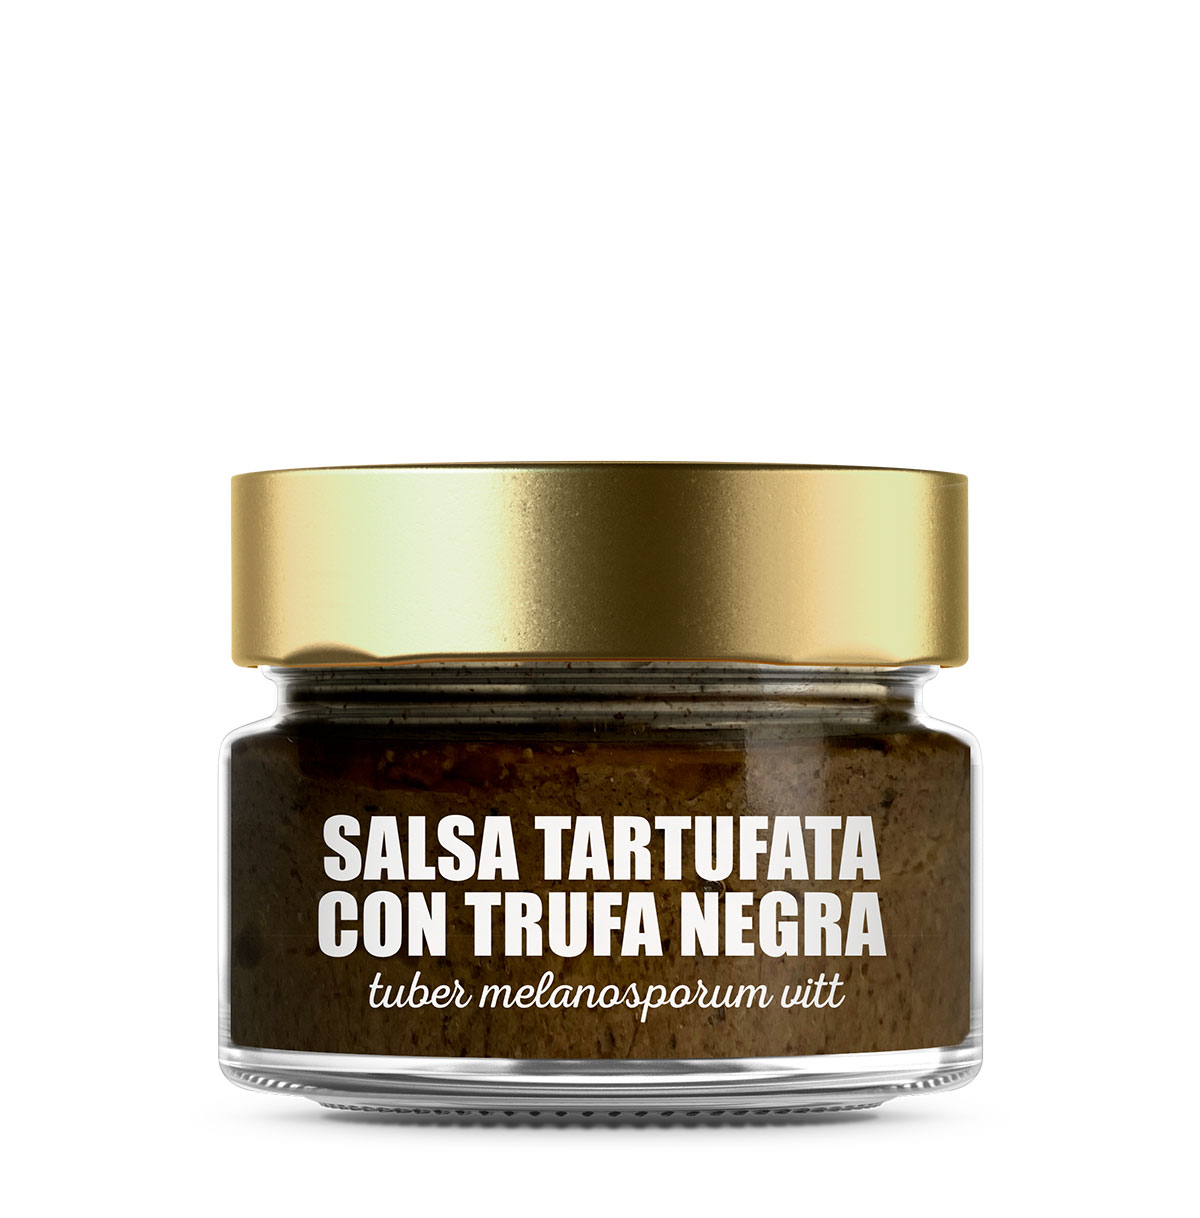 Truffle sauce with black truffle tuber melanosporum vitt